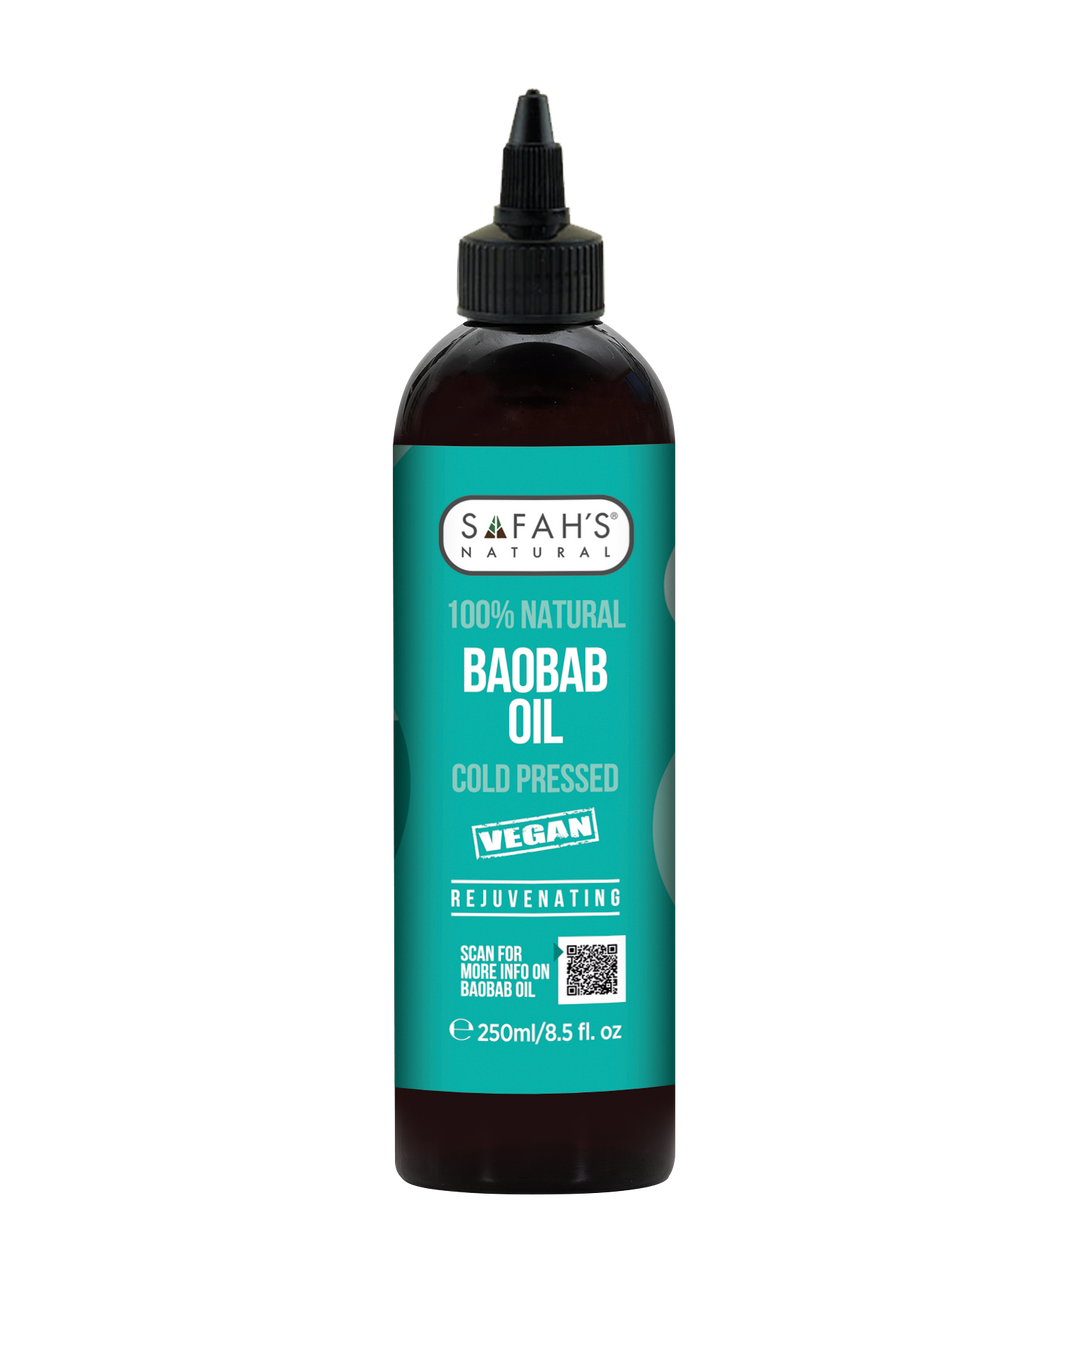 Baobab oil 100% natural - Complete Beauty Elixir for Radiant Wellness